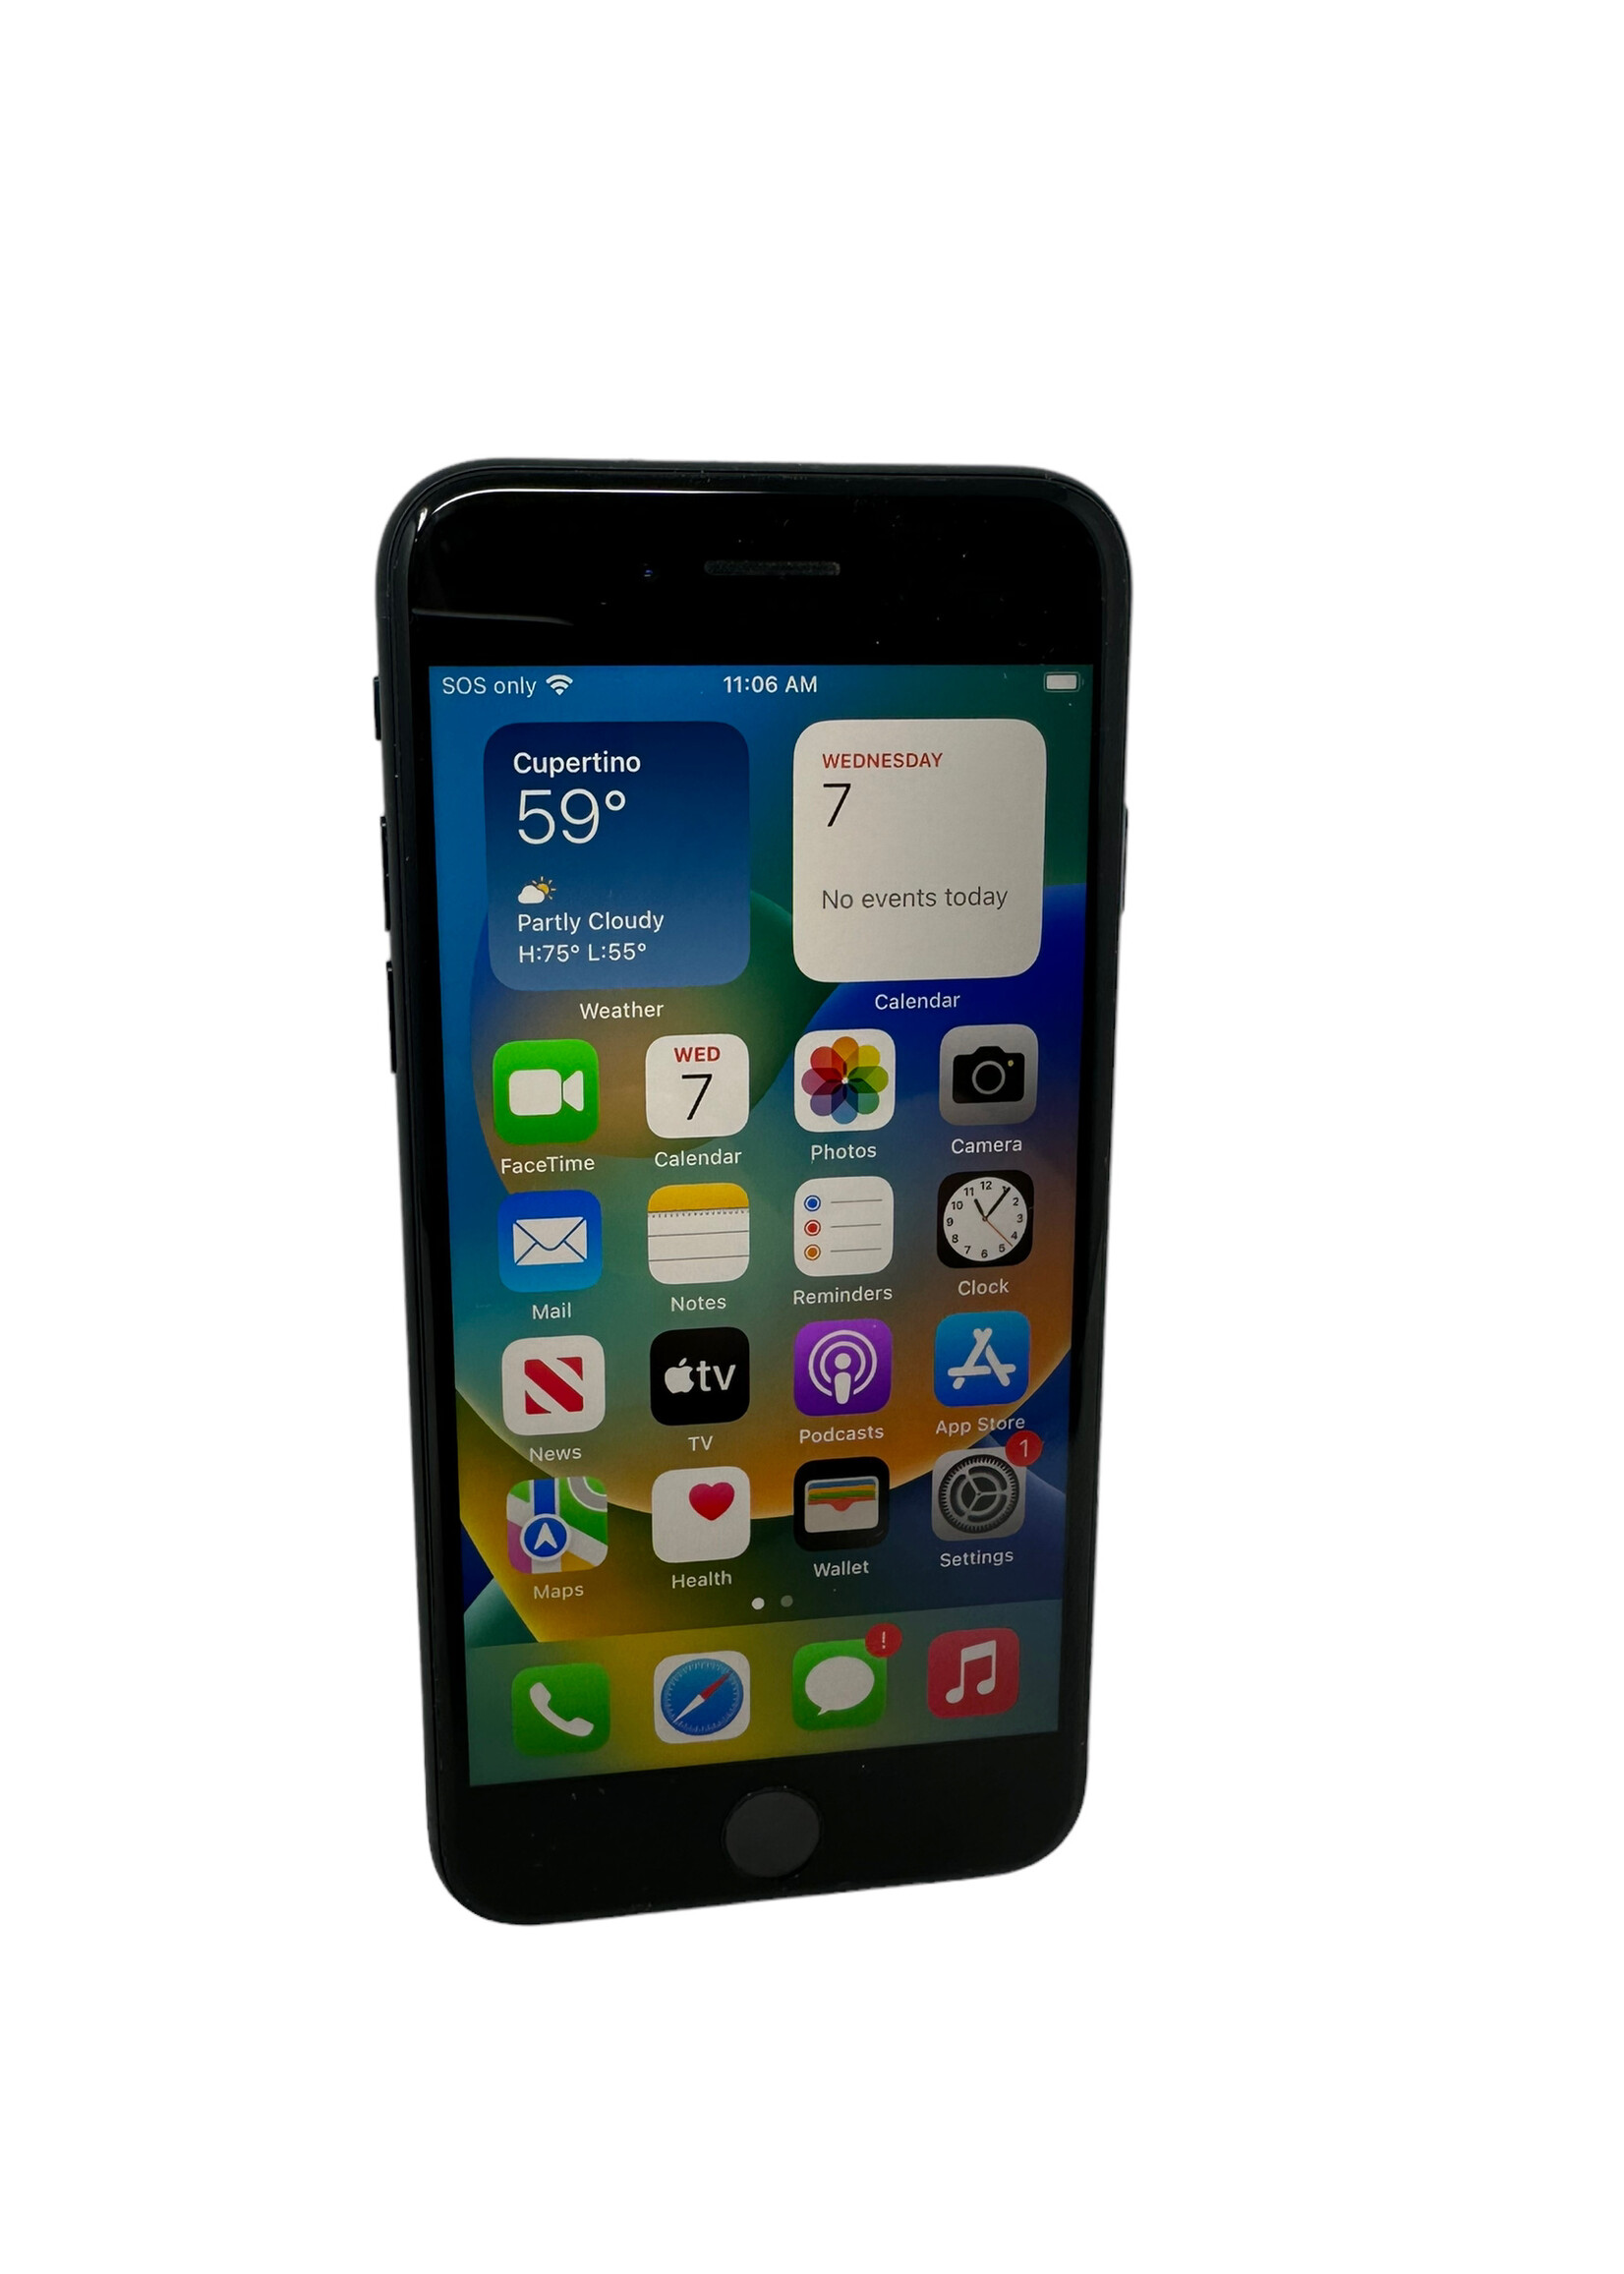 Apple USED Unlocked iPhone SE 5G 3rd Gen 64GB Midnight